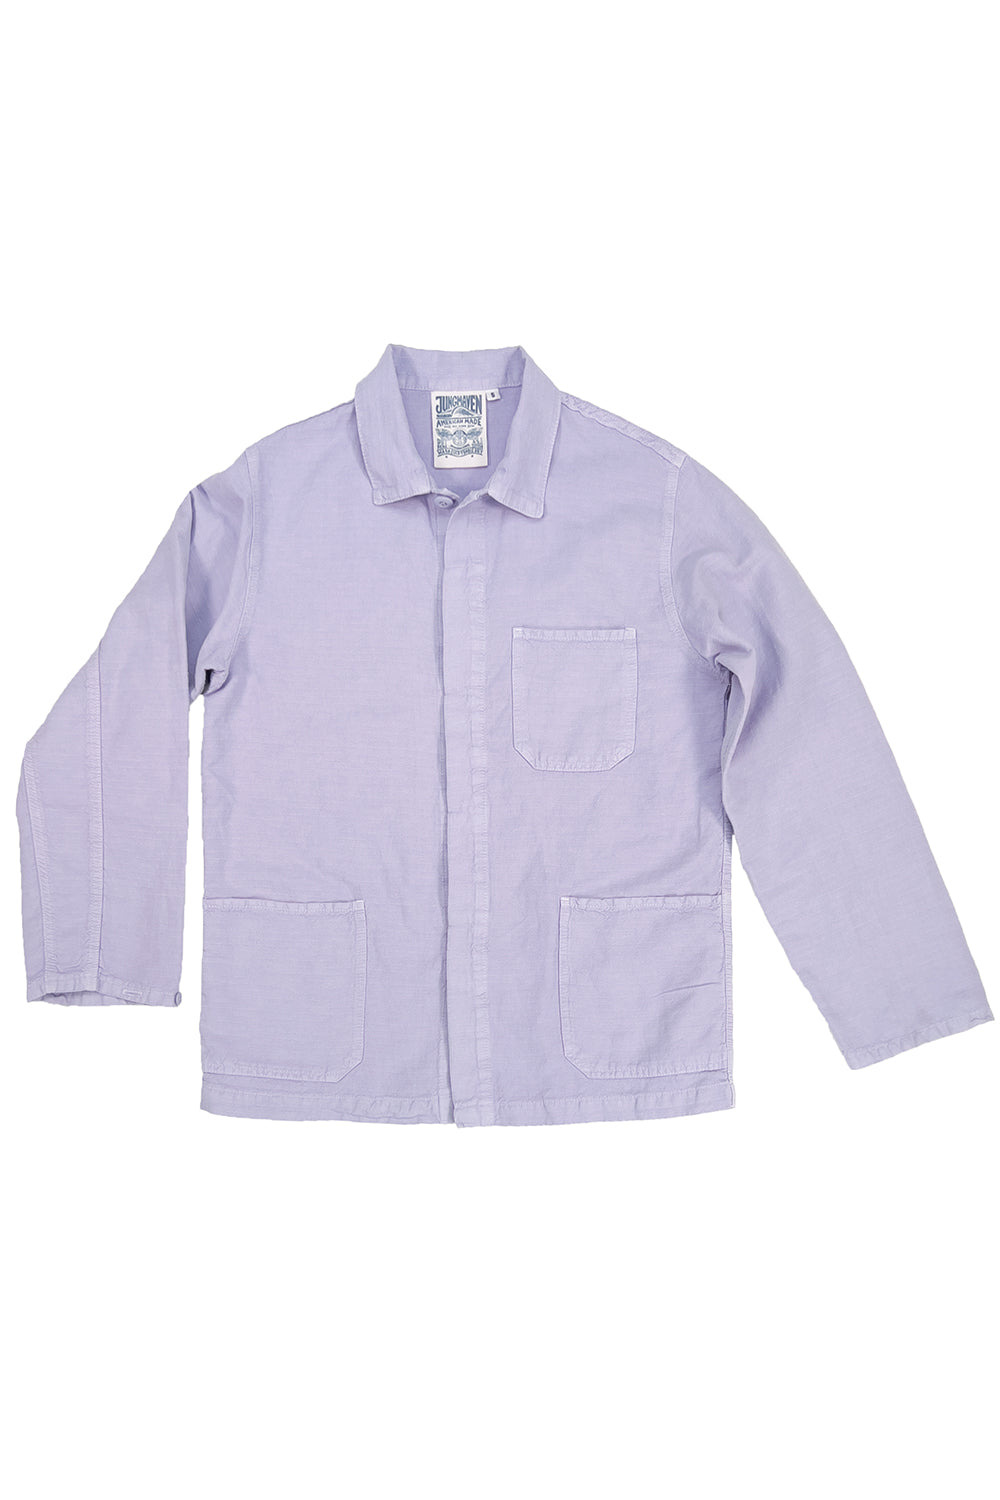 Cascade Jacket | Jungmaven Hemp Clothing & Accessories / Color:Misty Lilac